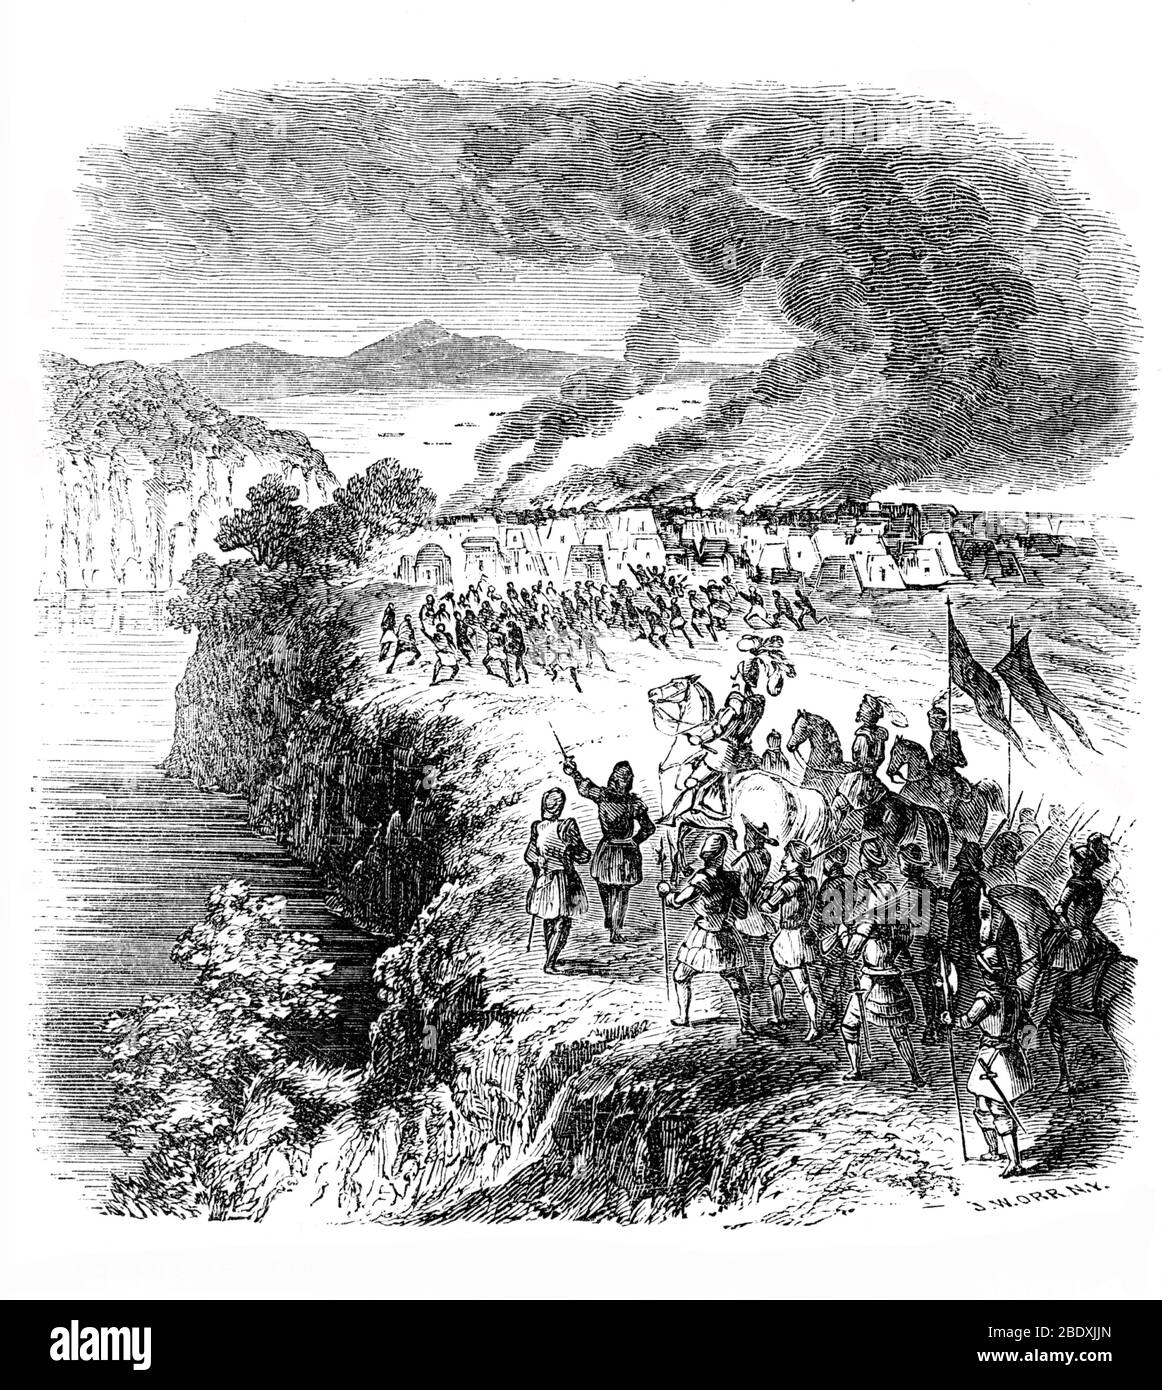 Native Americans Burning Village, 1540 Stock Photo